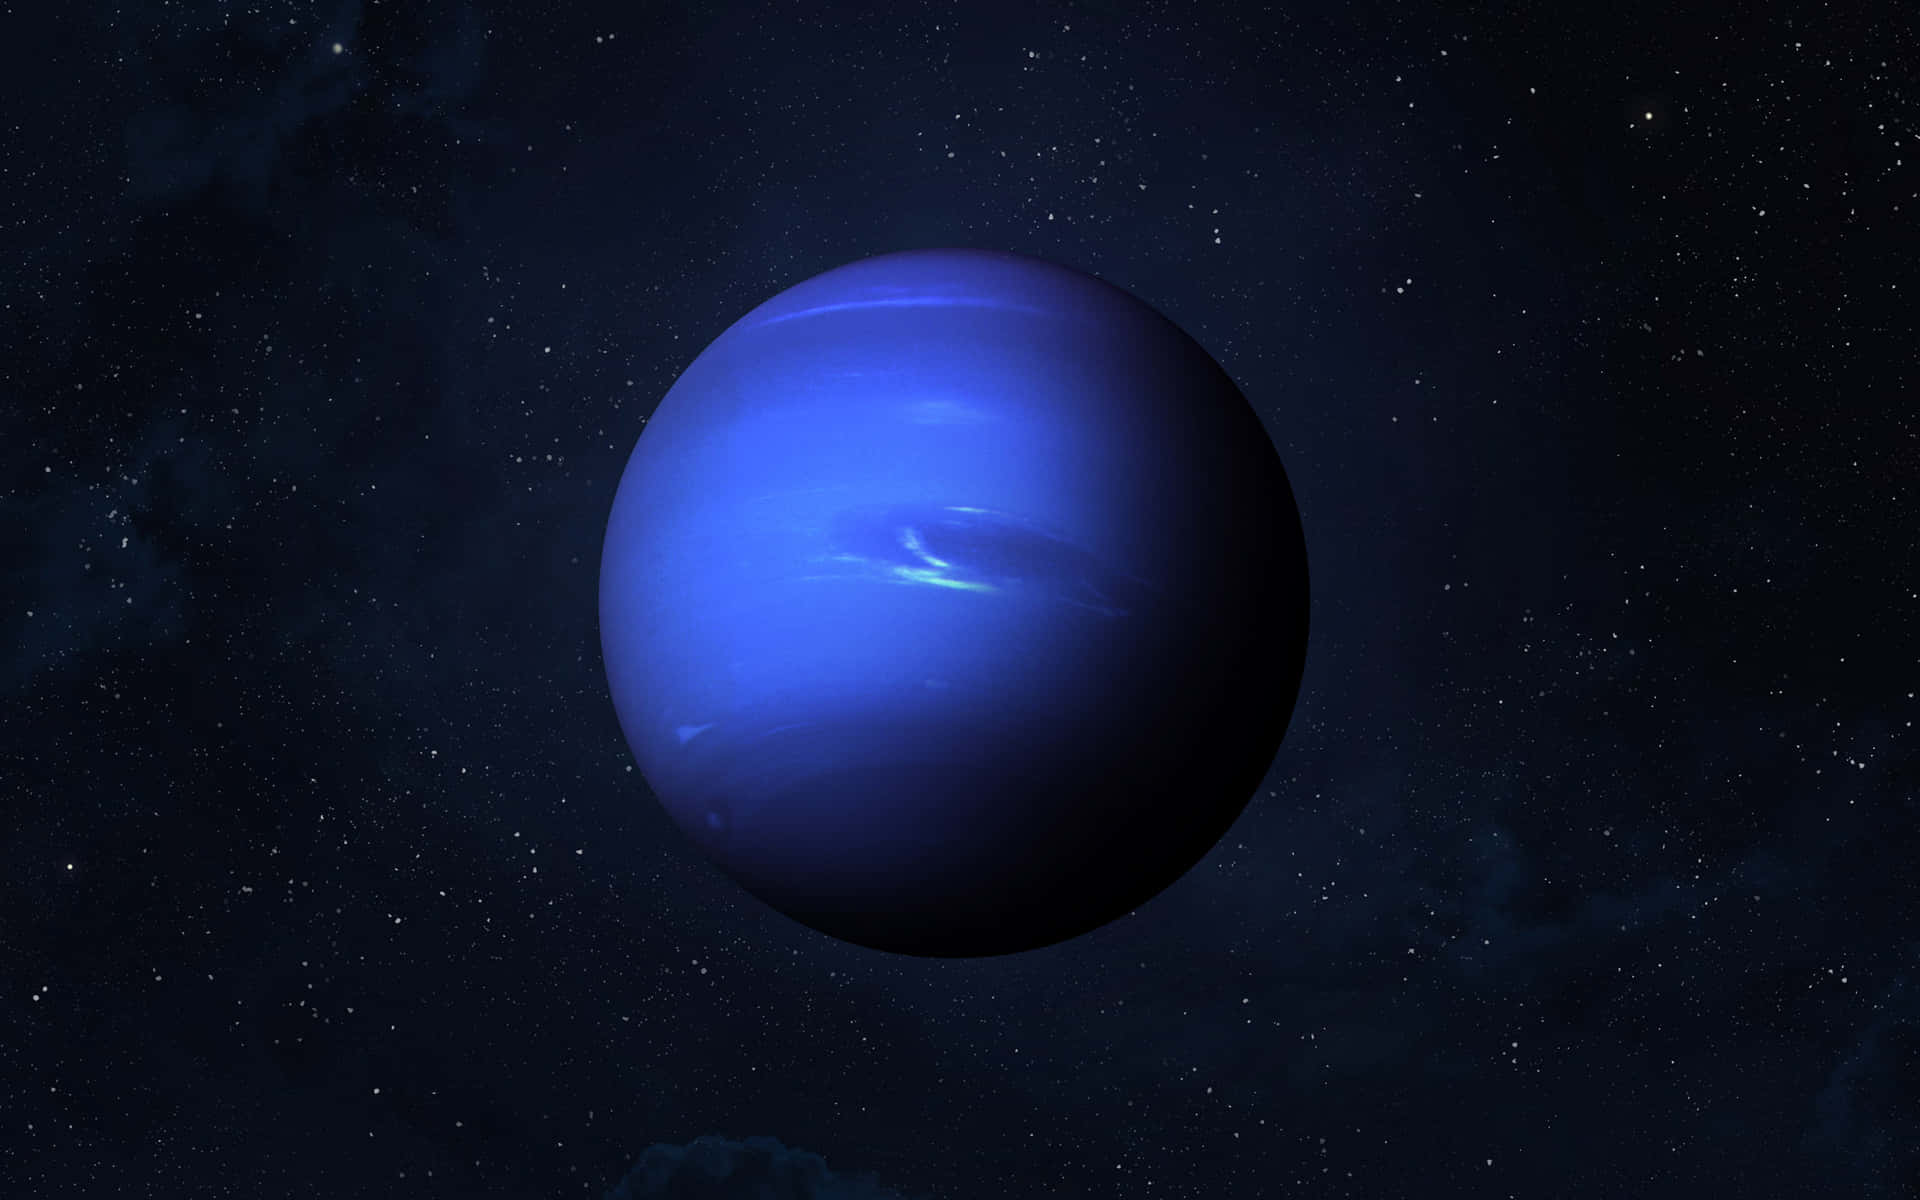 Stunning View of Uranus in High Resolution